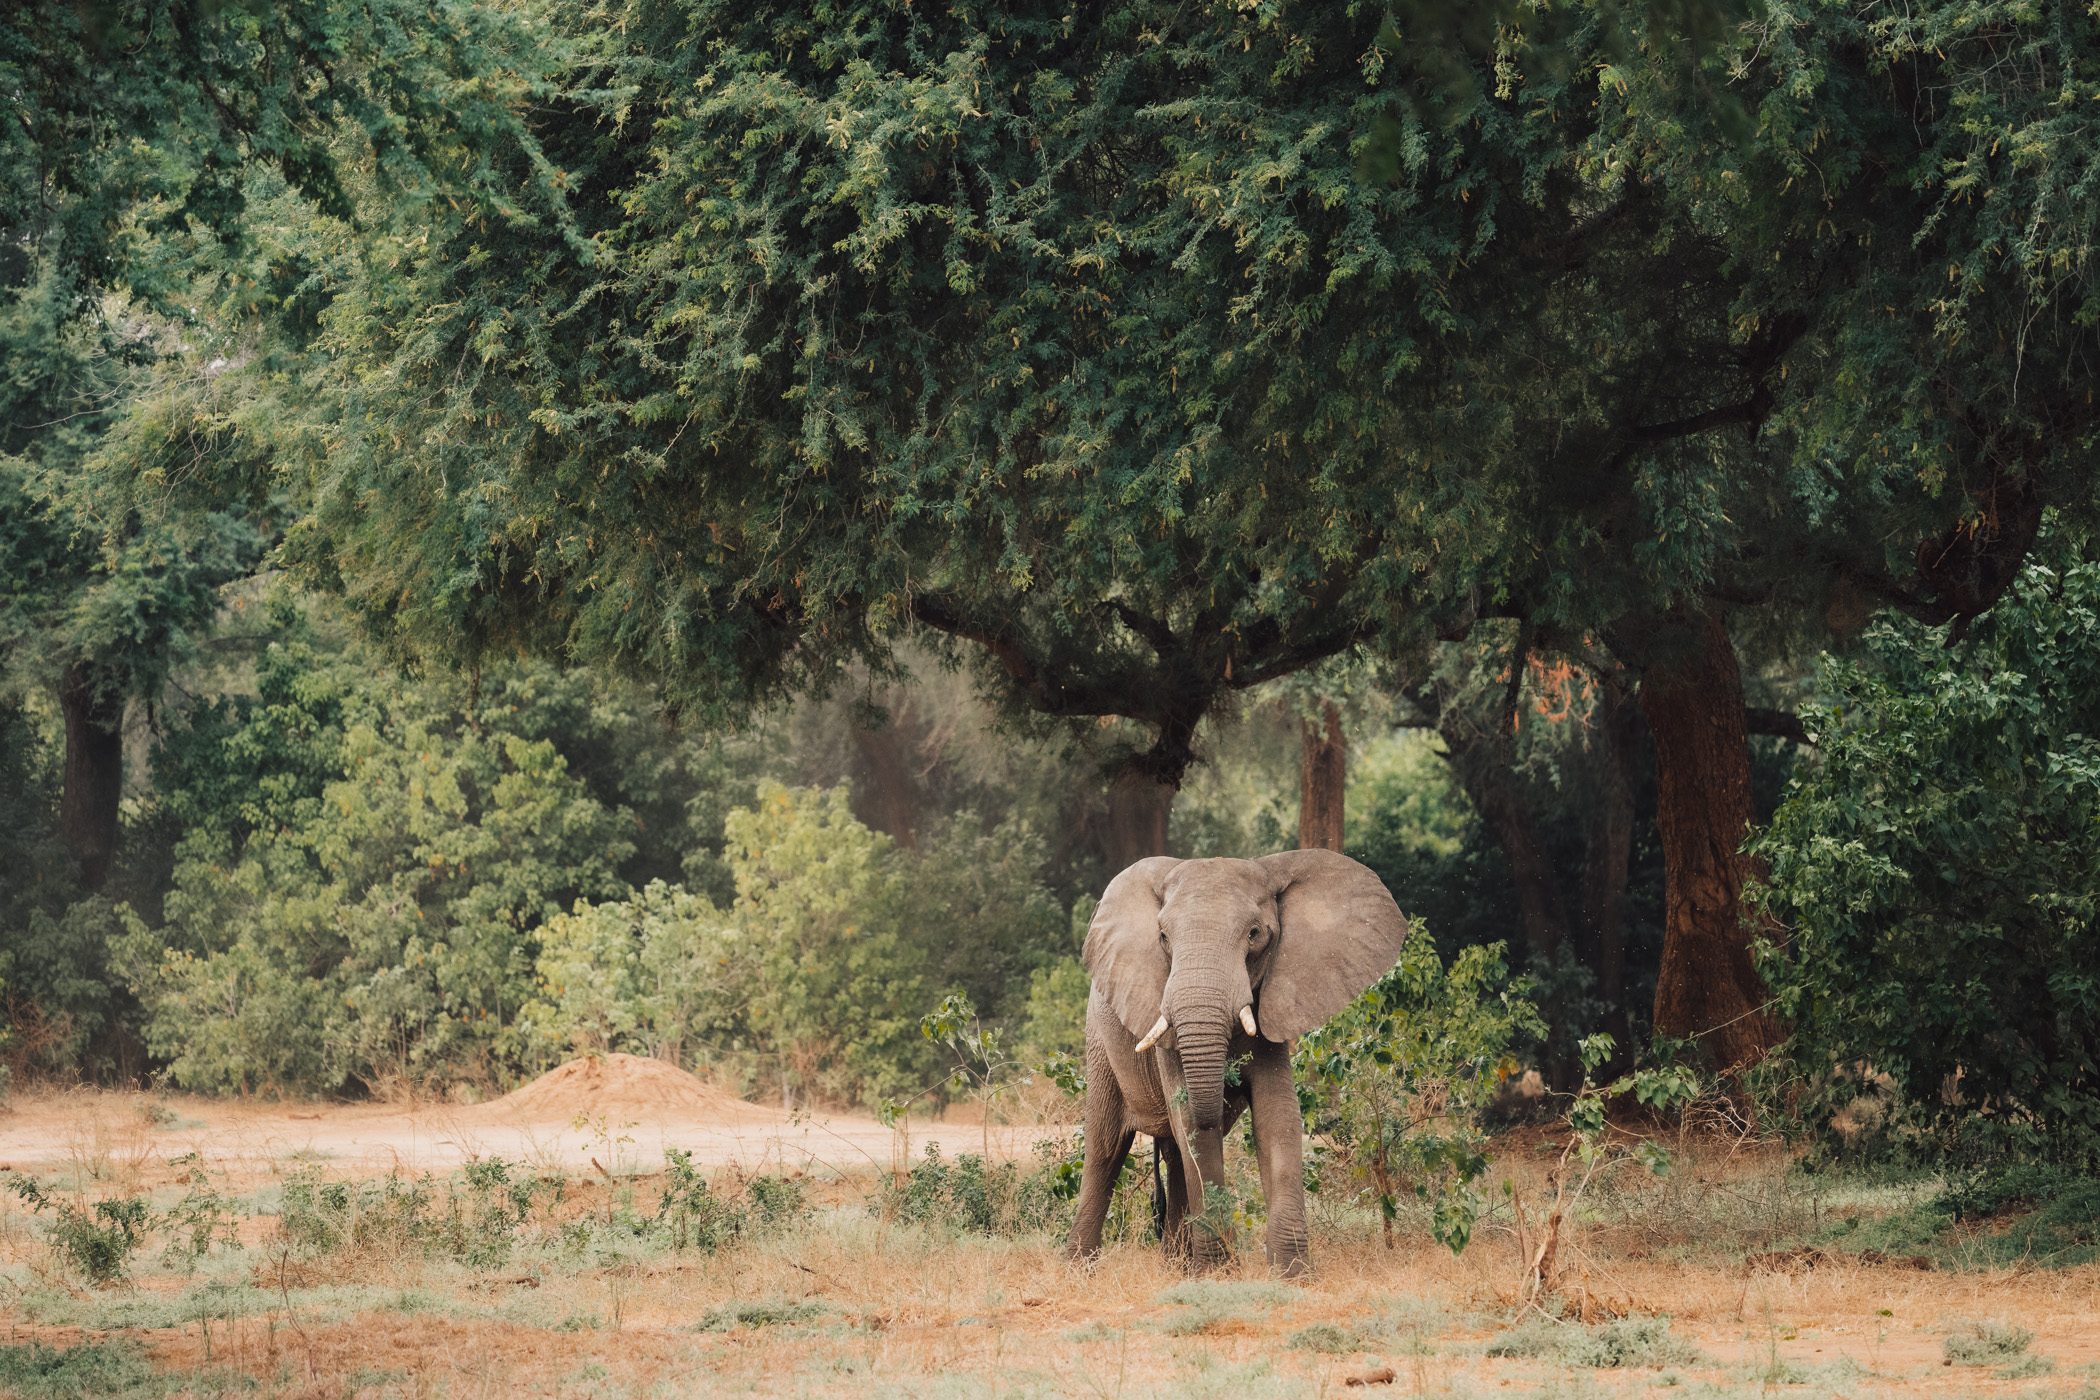 Travel Guide: Safari in the Lower Zambezi National Park in Zambia